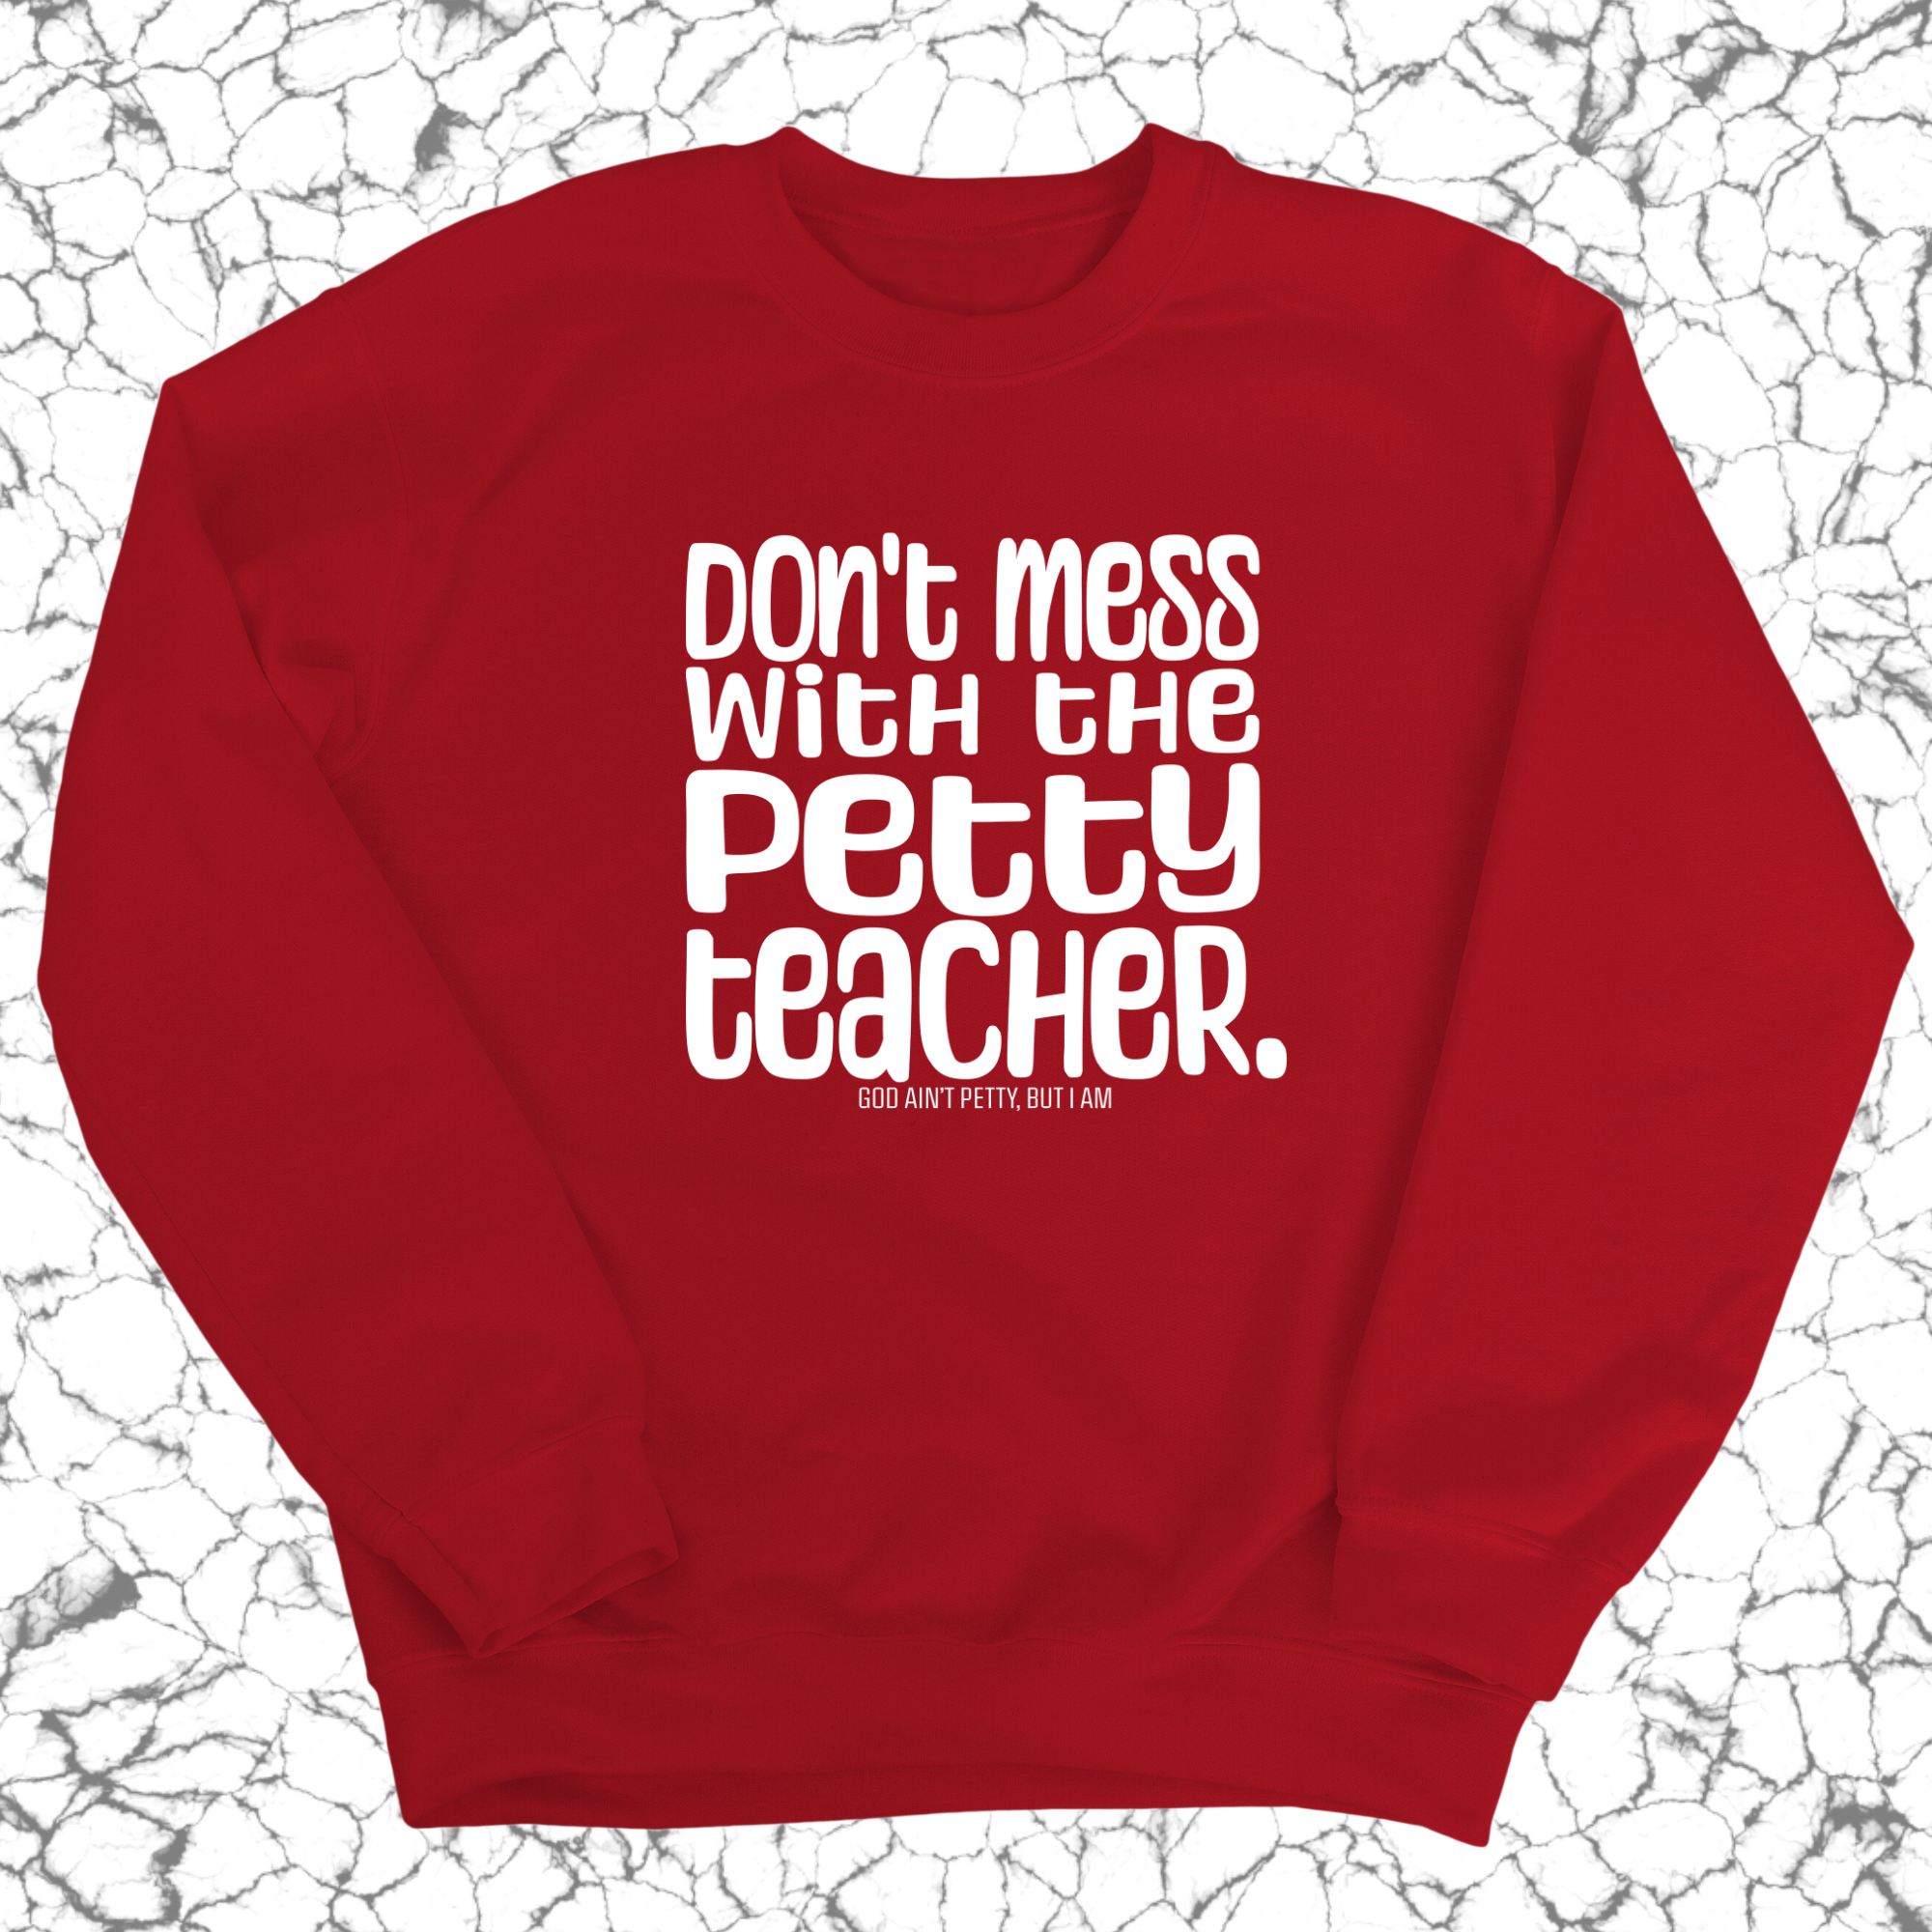 Don't Mess with the Petty Teacher Unisex Sweatshirt-Sweatshirt-The Original God Ain't Petty But I Am